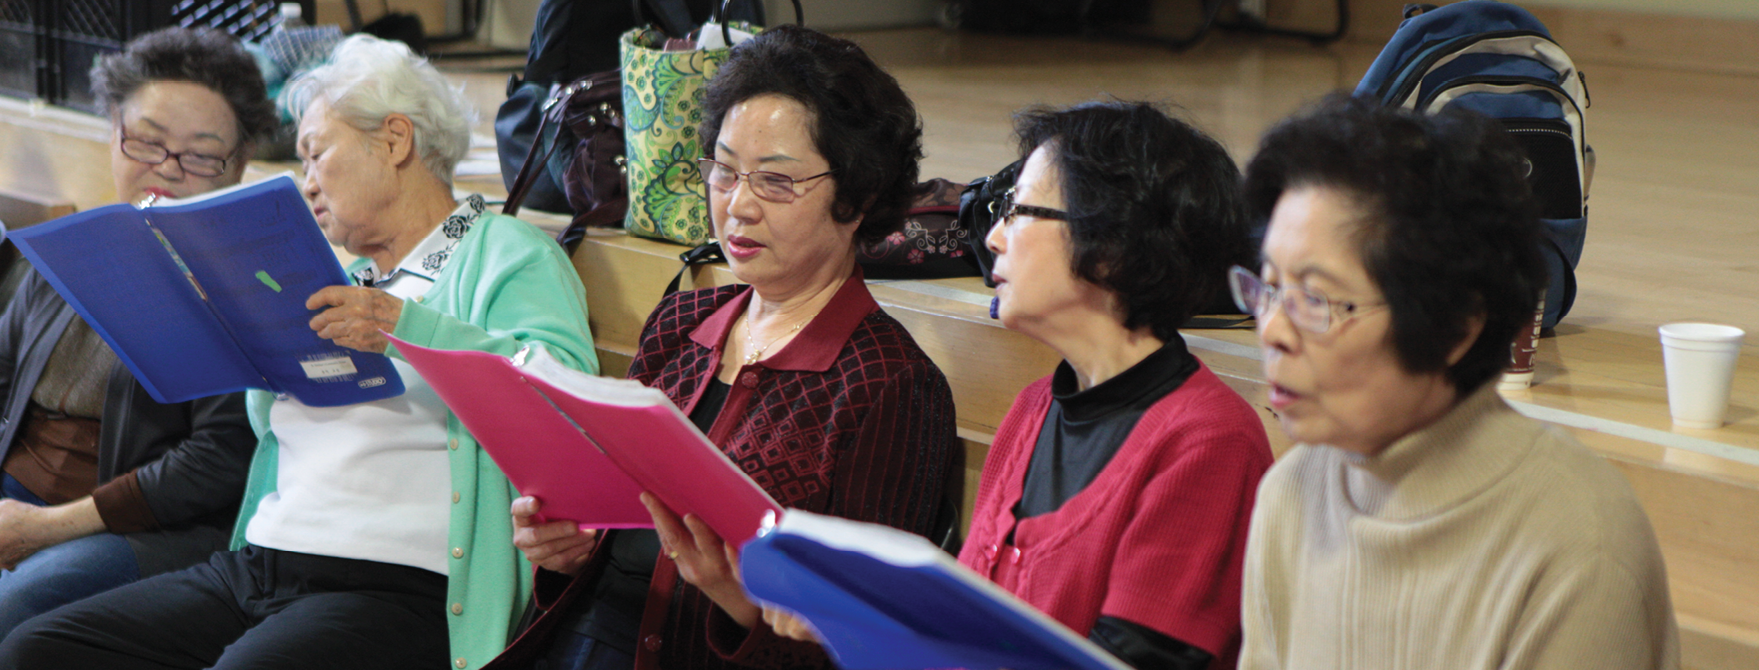 elderly women reading